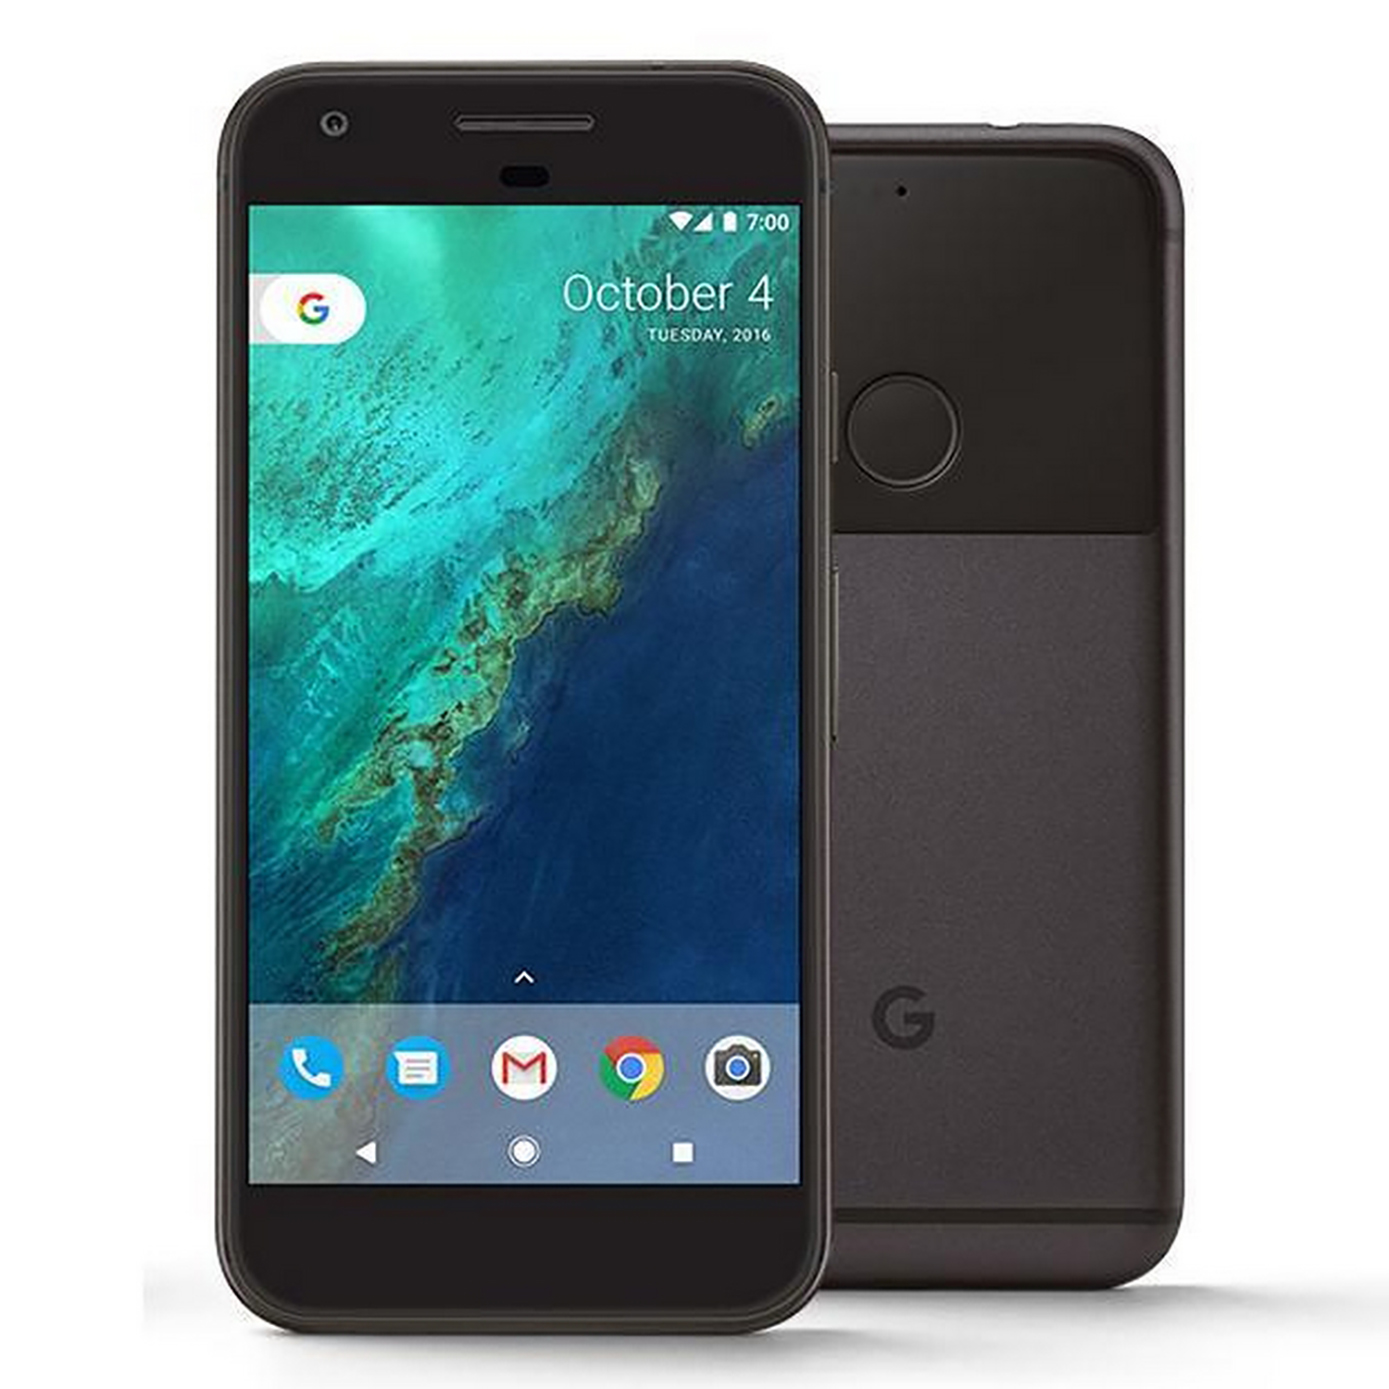 Google Pixel Phone 128 GB - 5 inch Display (Factory Unlocked US Version) (Quite Black) - image 3 of 6